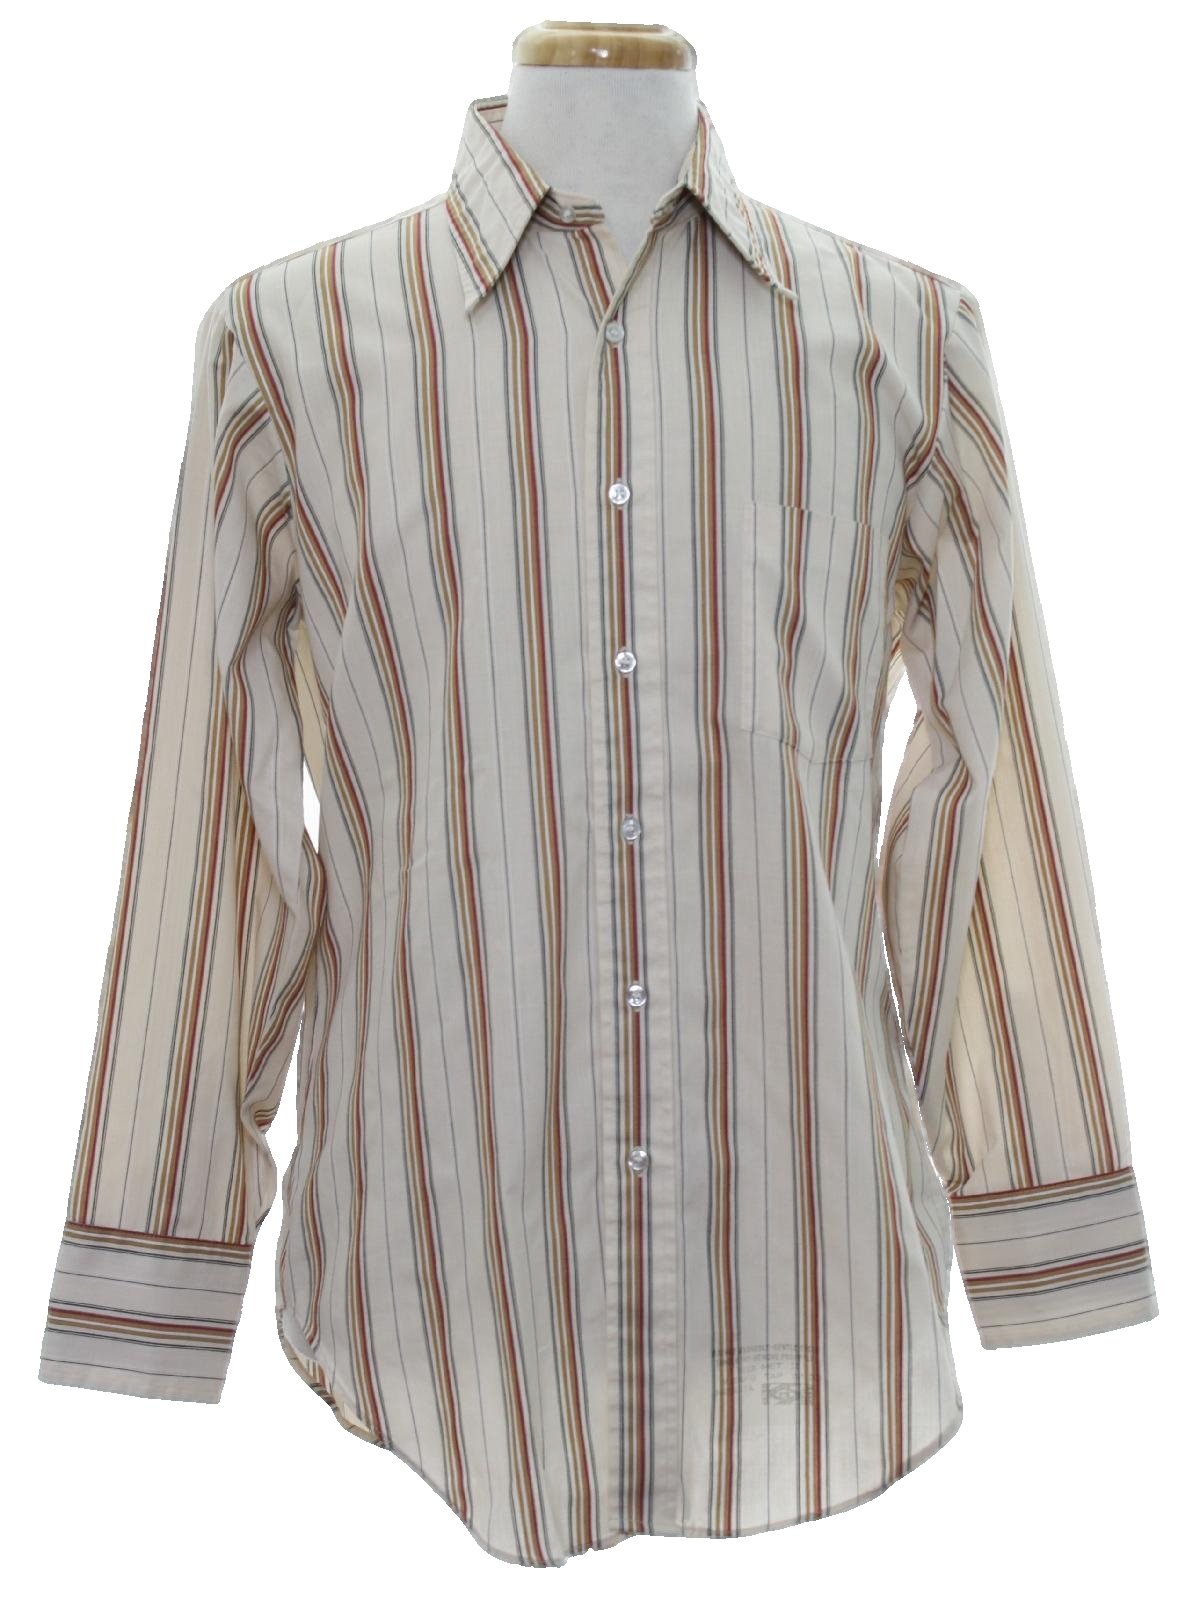 Retro 1960's Shirt (Fabric Label) : Late 60s -Fabric Label- Mens light ...